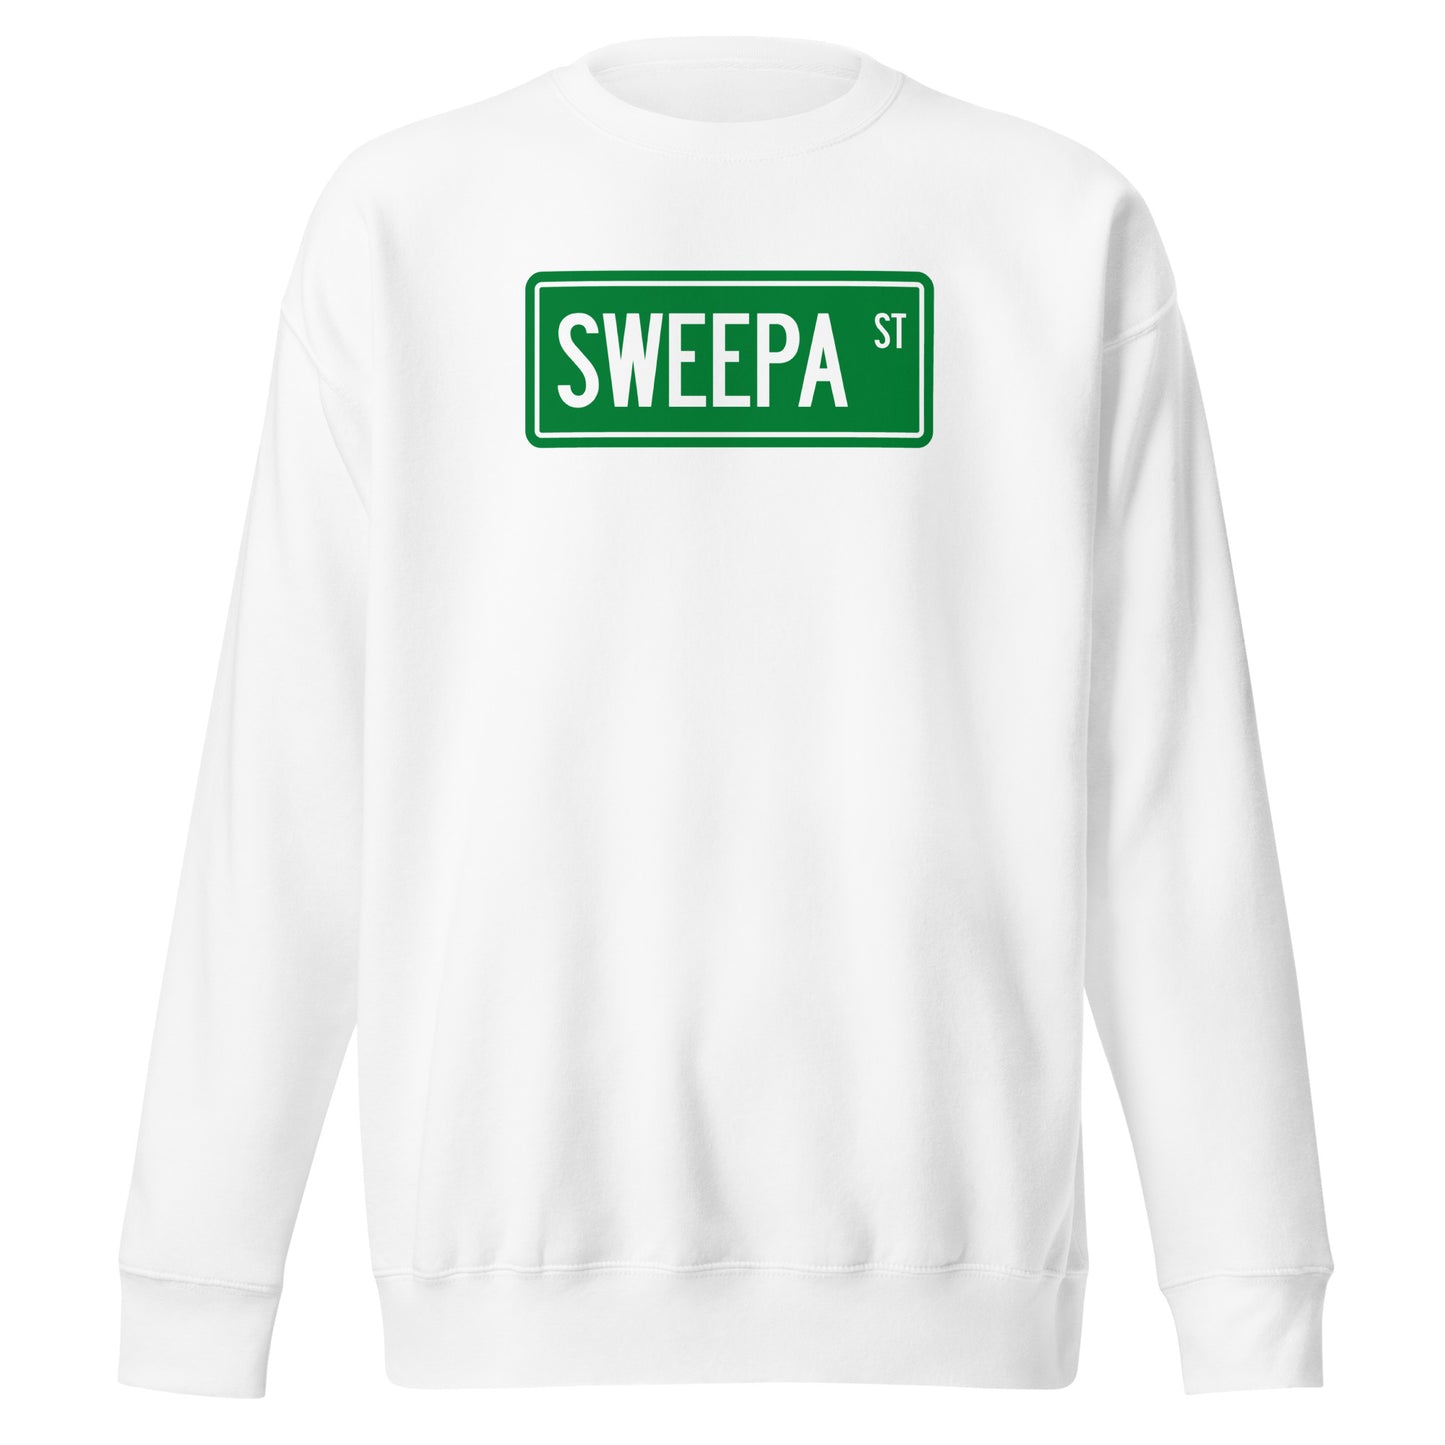 STREET SWEEPA - Unisex Premium Sweatshirt